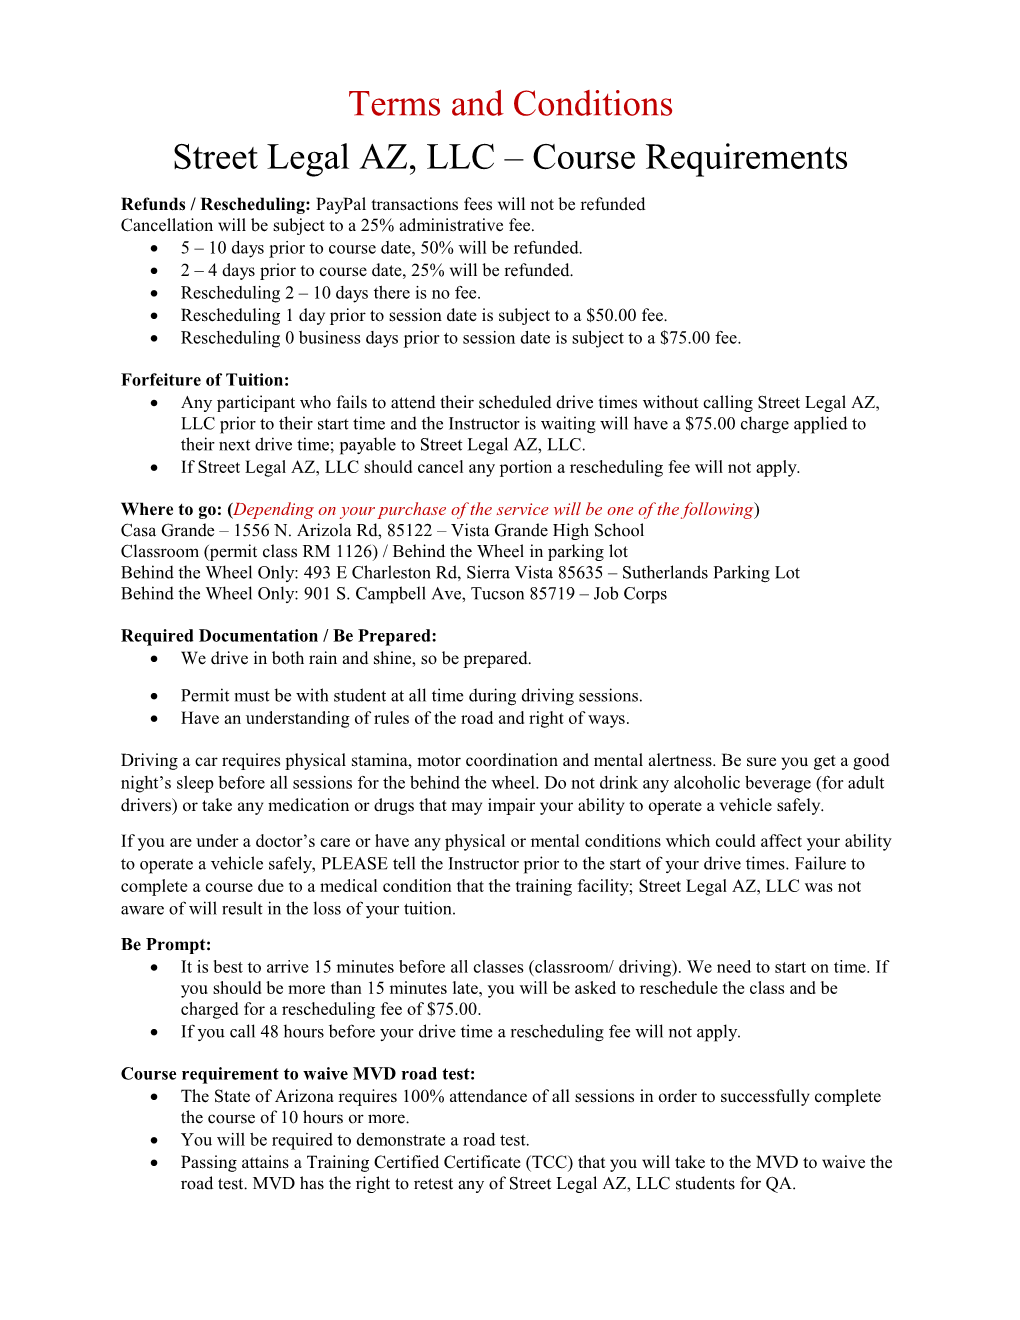 Street Legal AZ, LLC Course Requirements